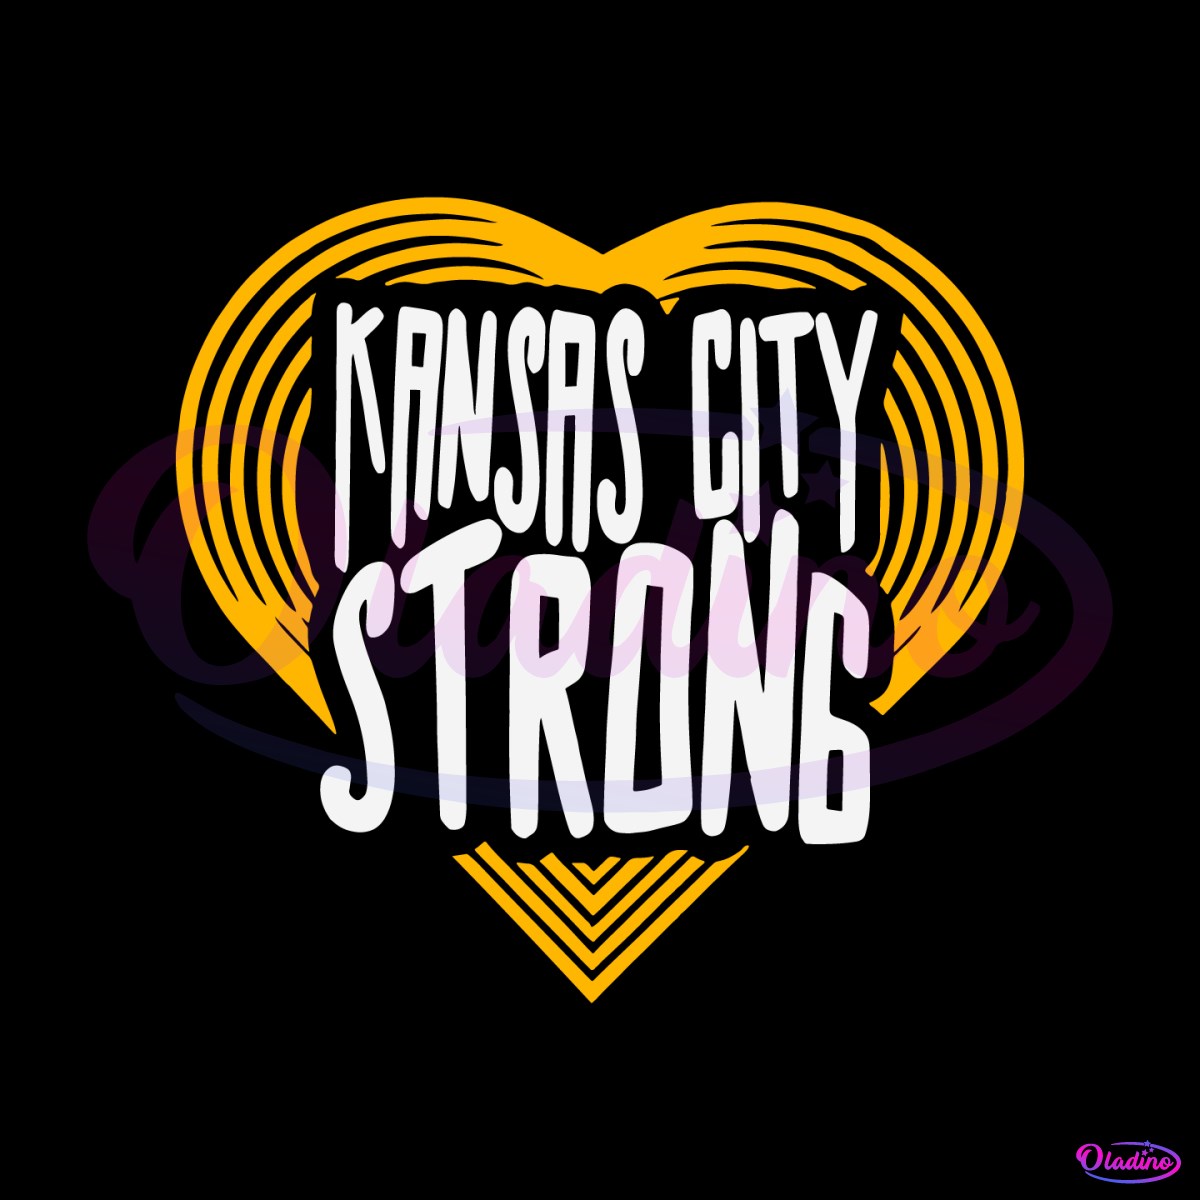 Kansas City Strong End Gun Violence SVG - Politics SVG